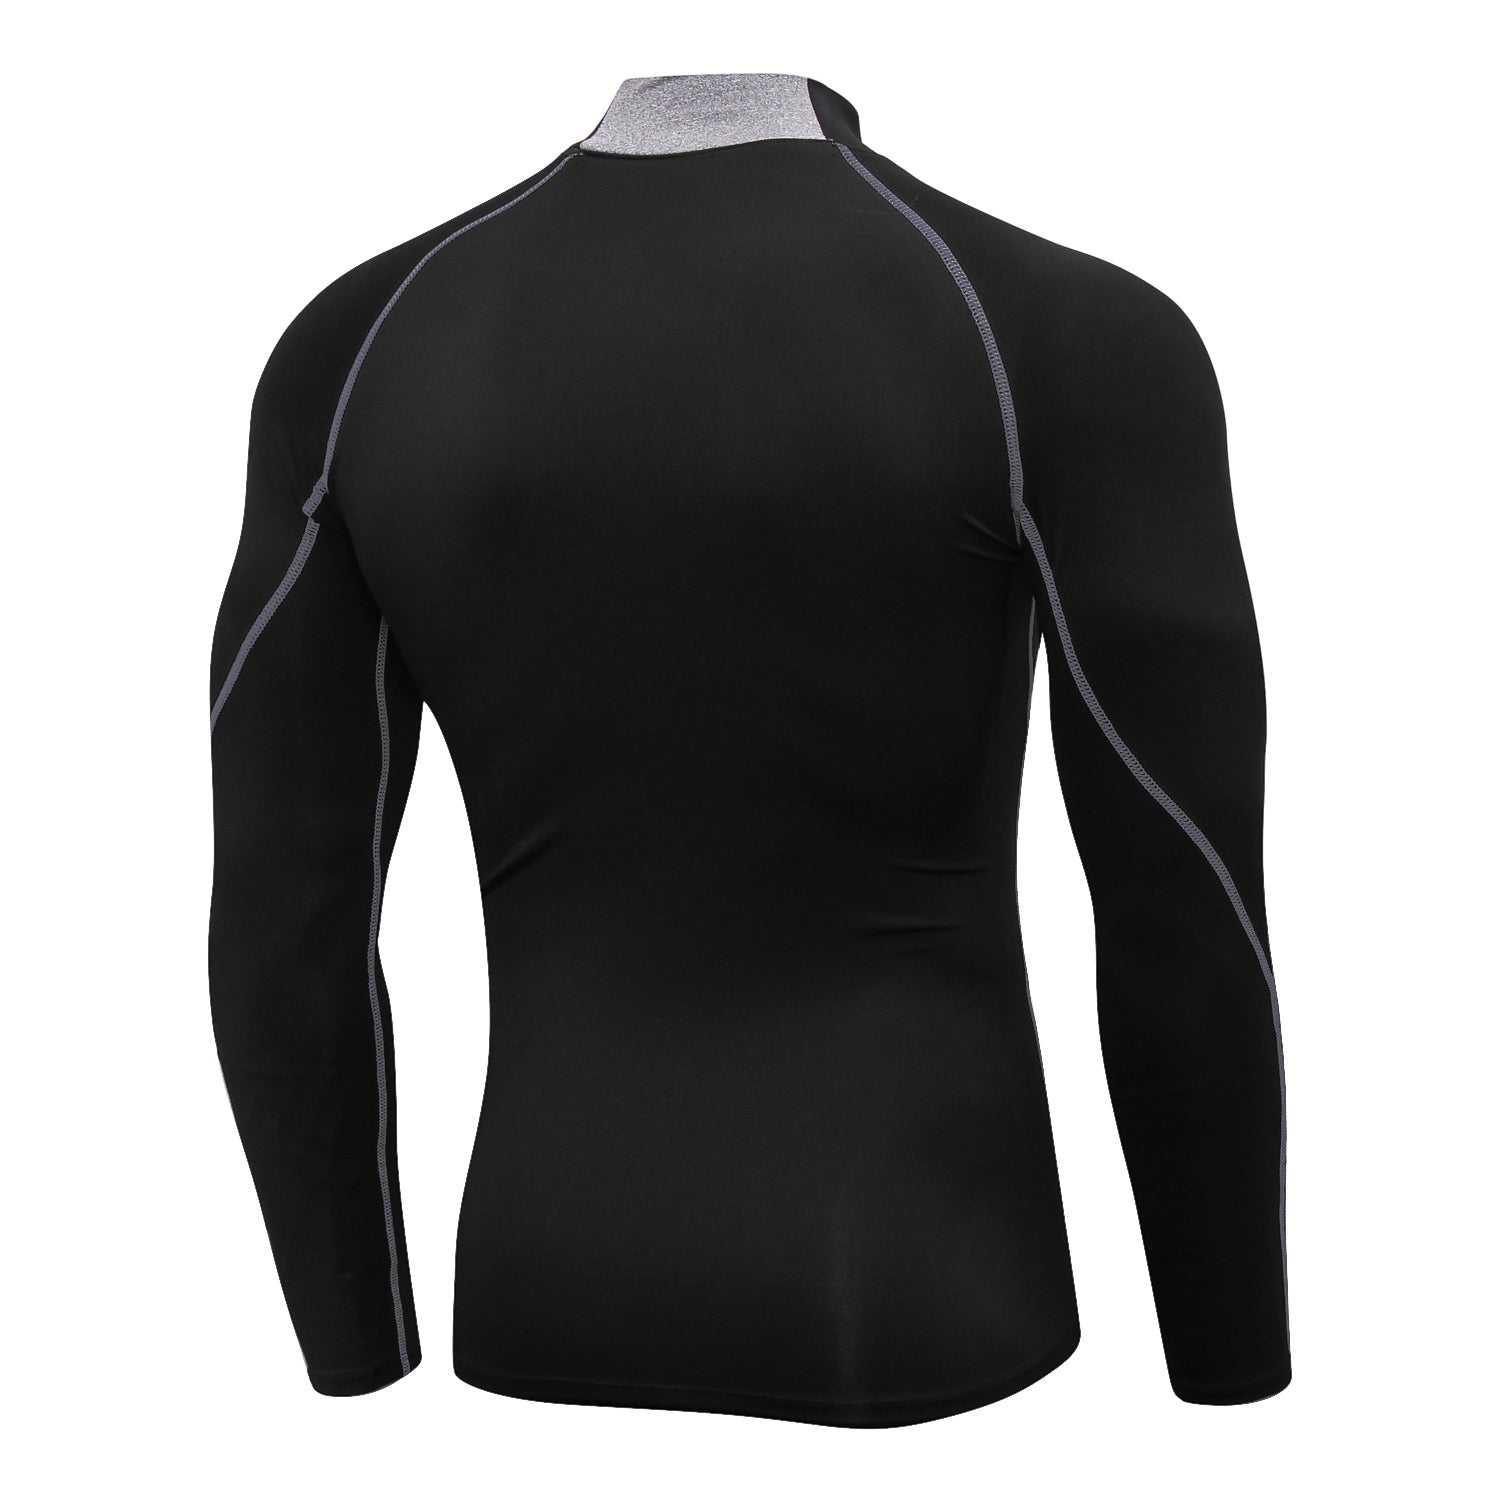 LANBAOSI Men's Winter Thermal Fleece Underwear Sportswear Compression Tight  Baselayer Cycling Running Workout Training Shirts